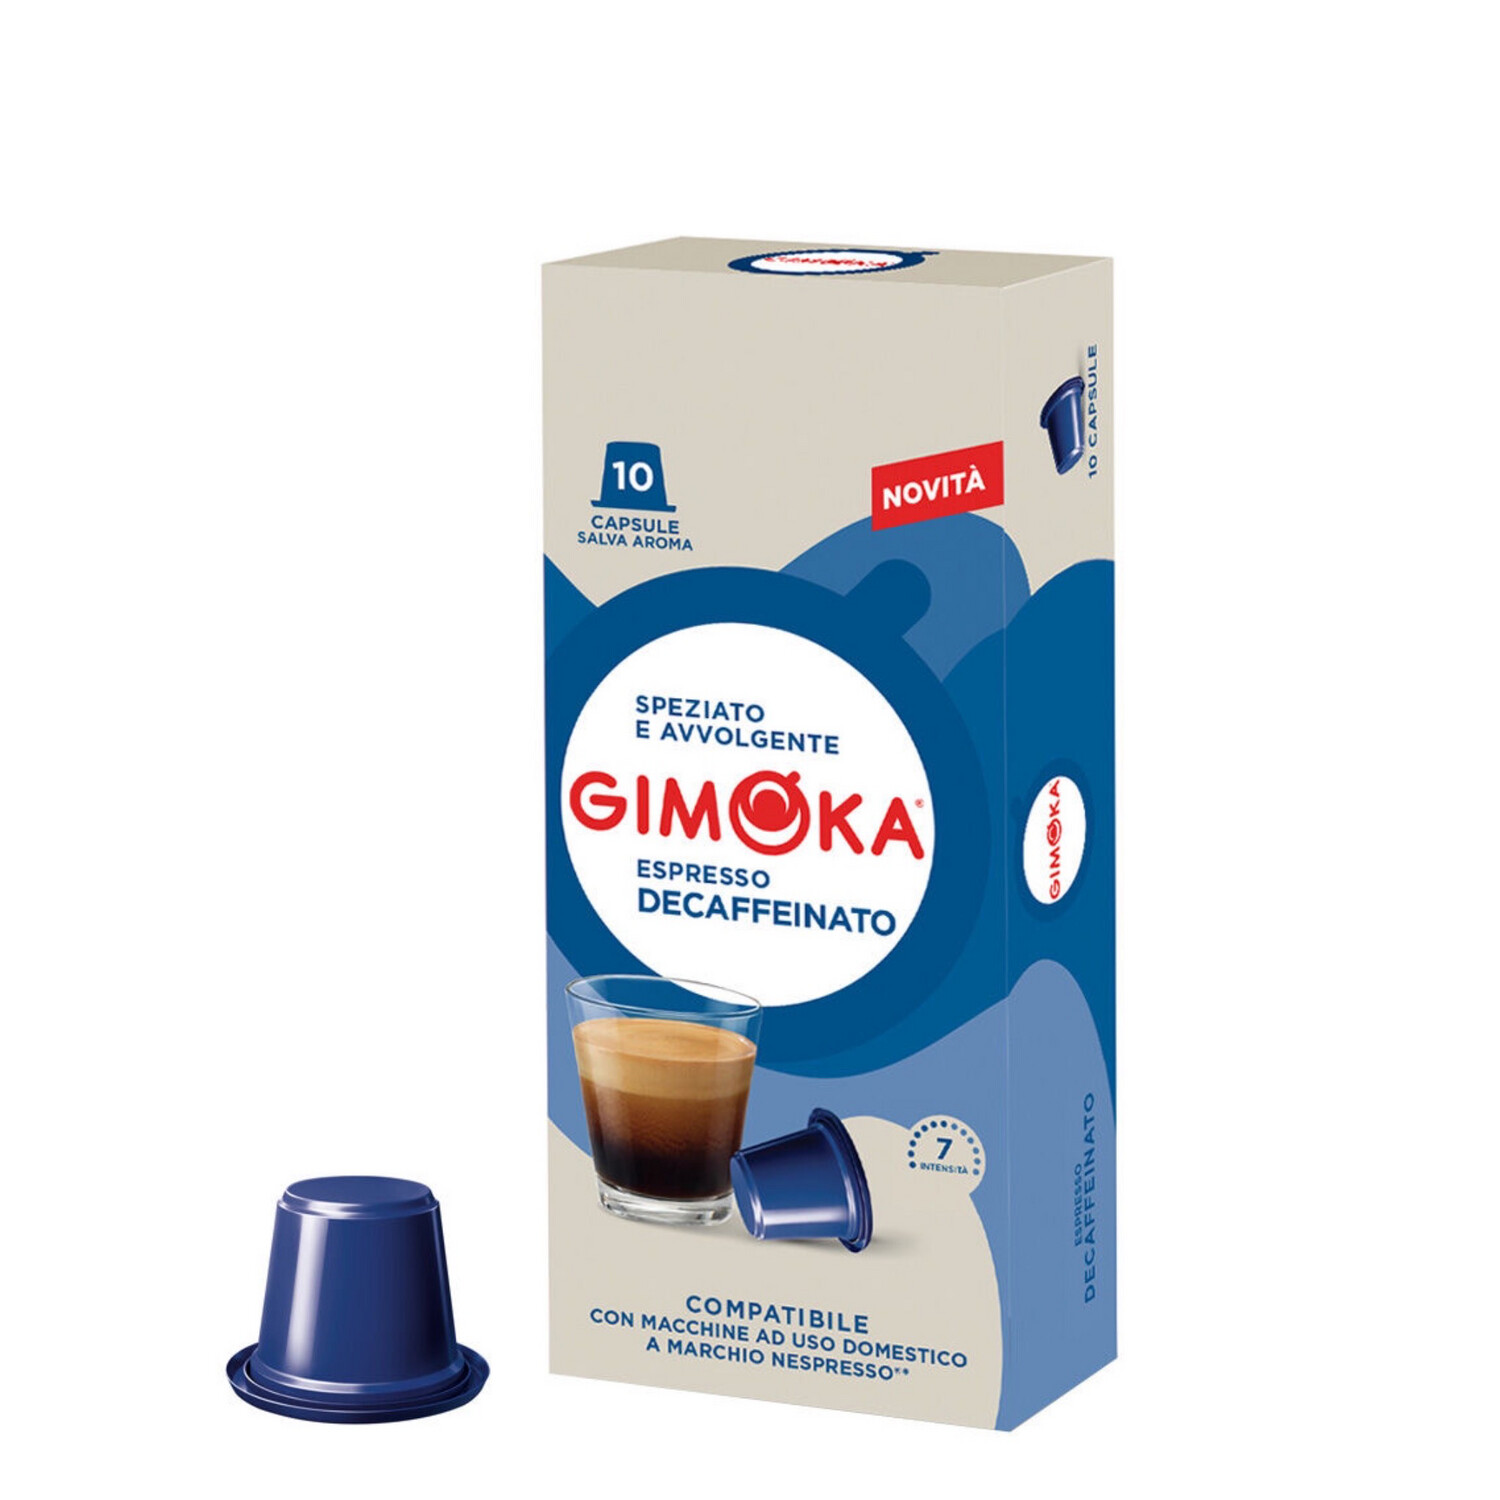 Gimoka Nespresso Soave Decaffeinate espresso x10 капсули